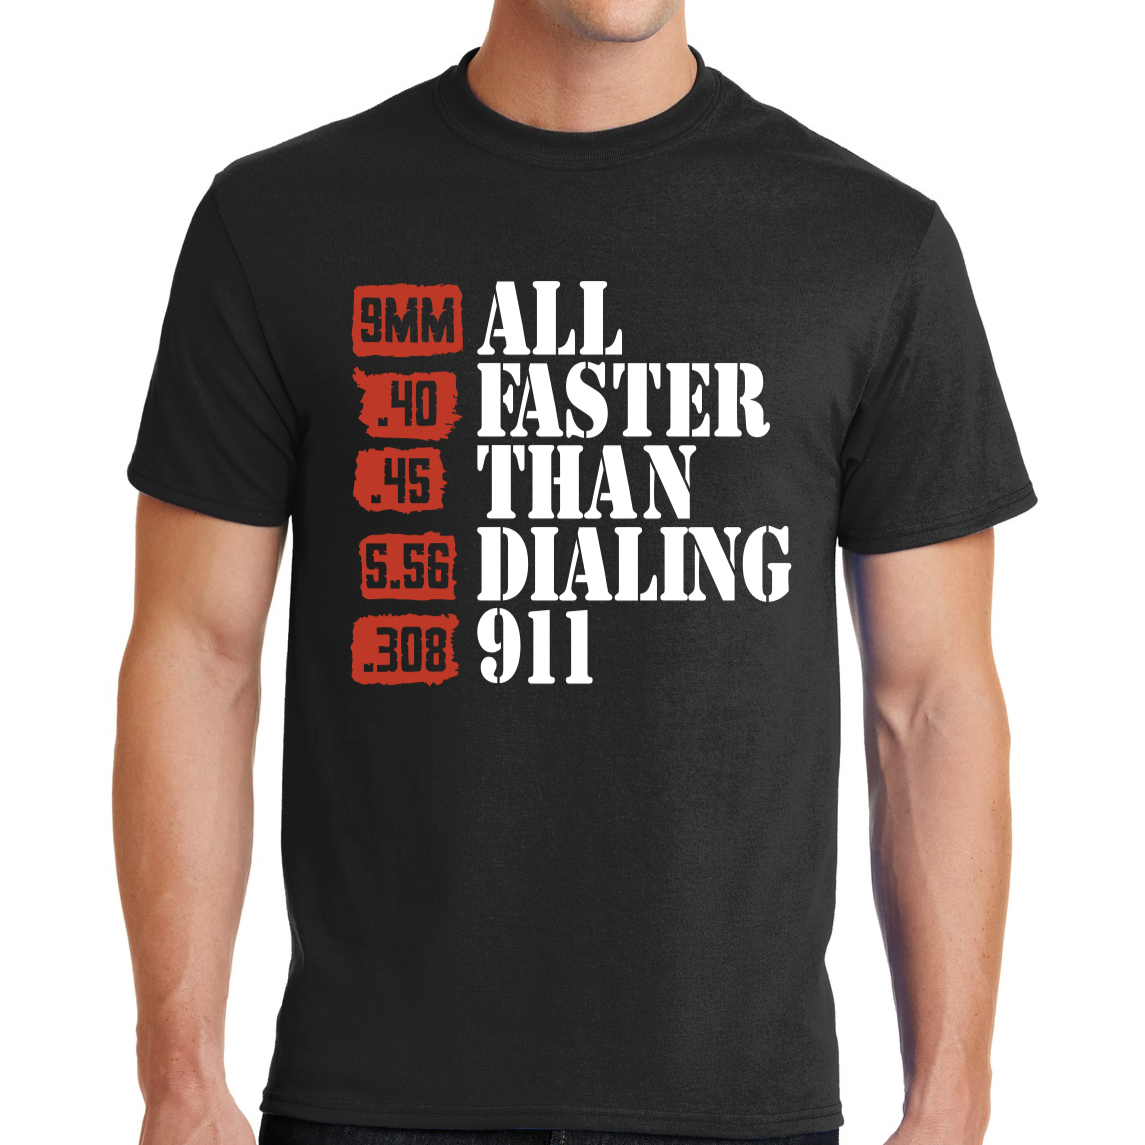 Faster Than 911 - T-Shirt